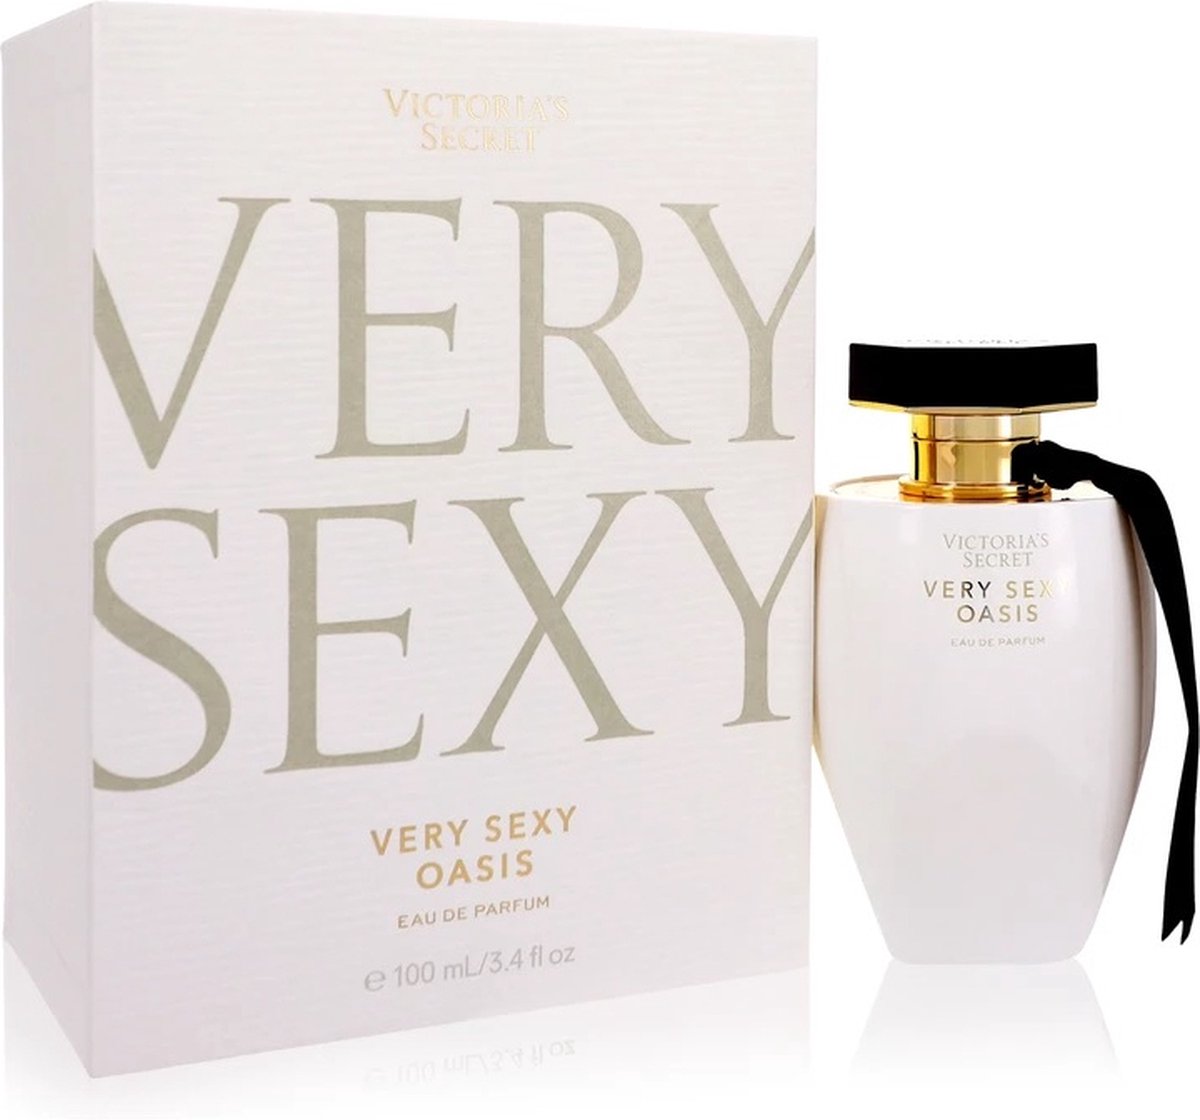 Victoria's Secret - Very Sexy Oasis - Eau de parfum spray - 100 ml